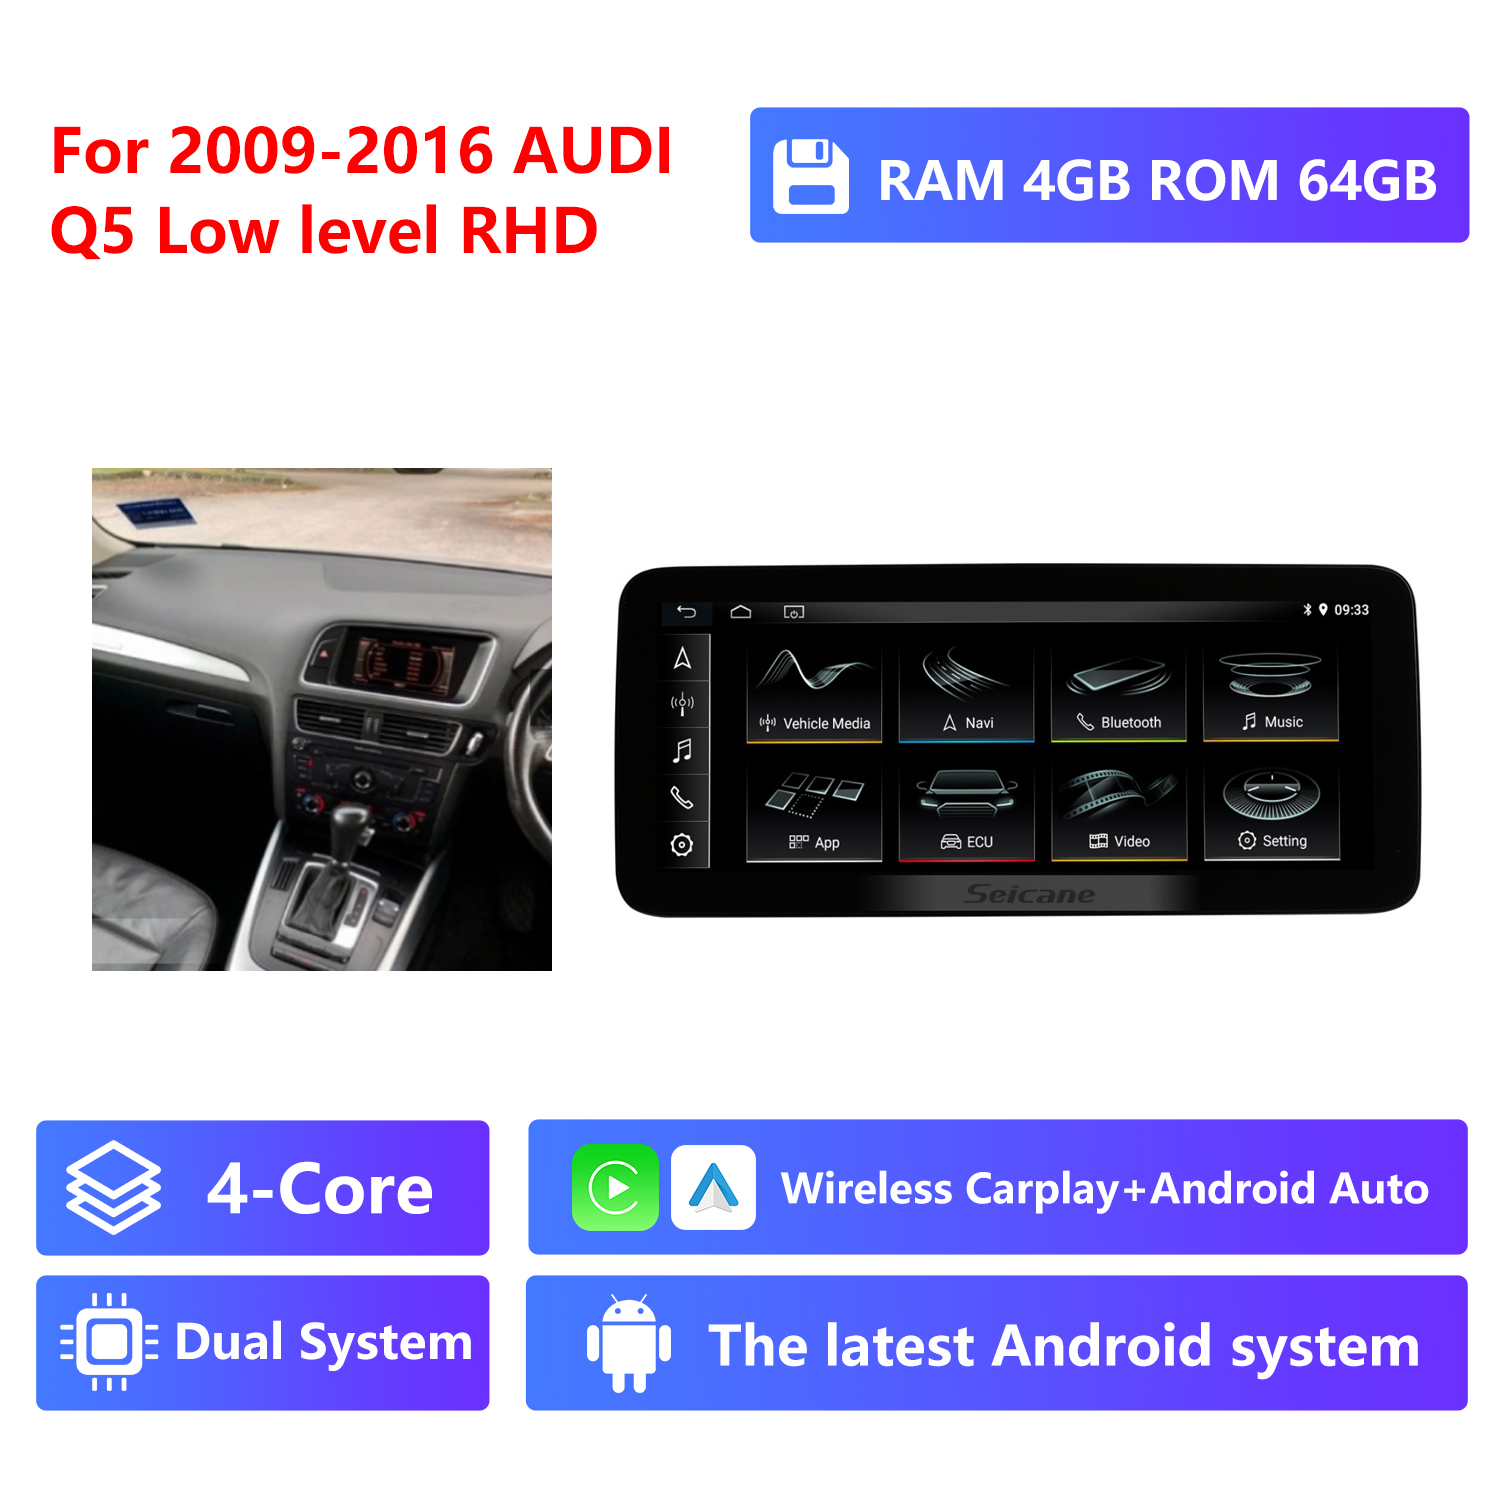 4-Core RAM 4G ROM 64G,2008-2016,Low version,RHD